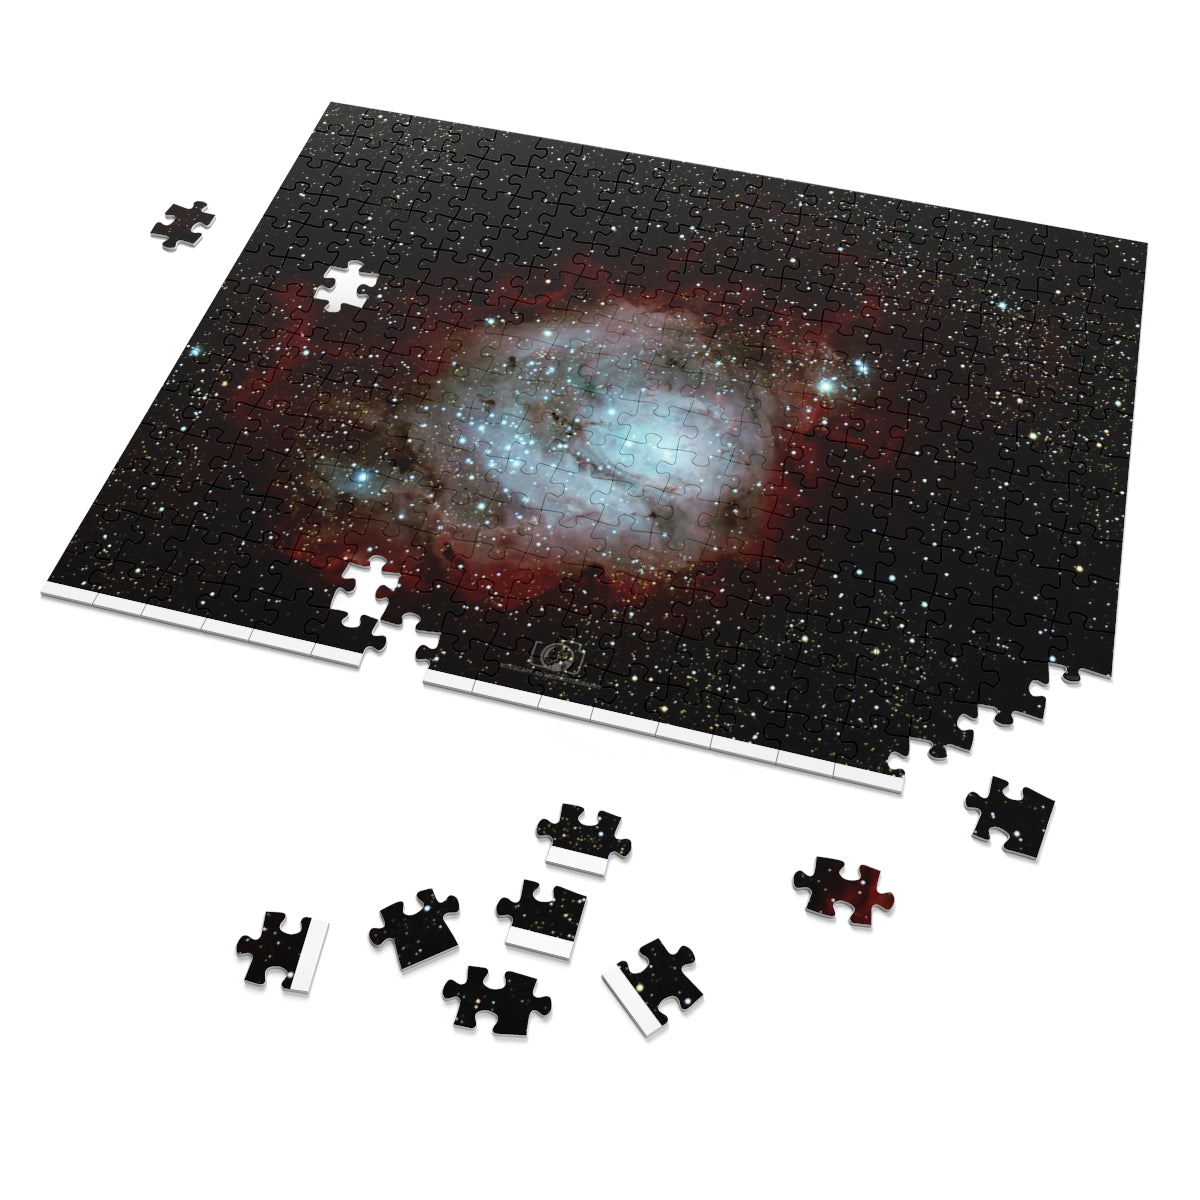 Educational Educational Jigsaw Puzzle:  Lagoon Nebula